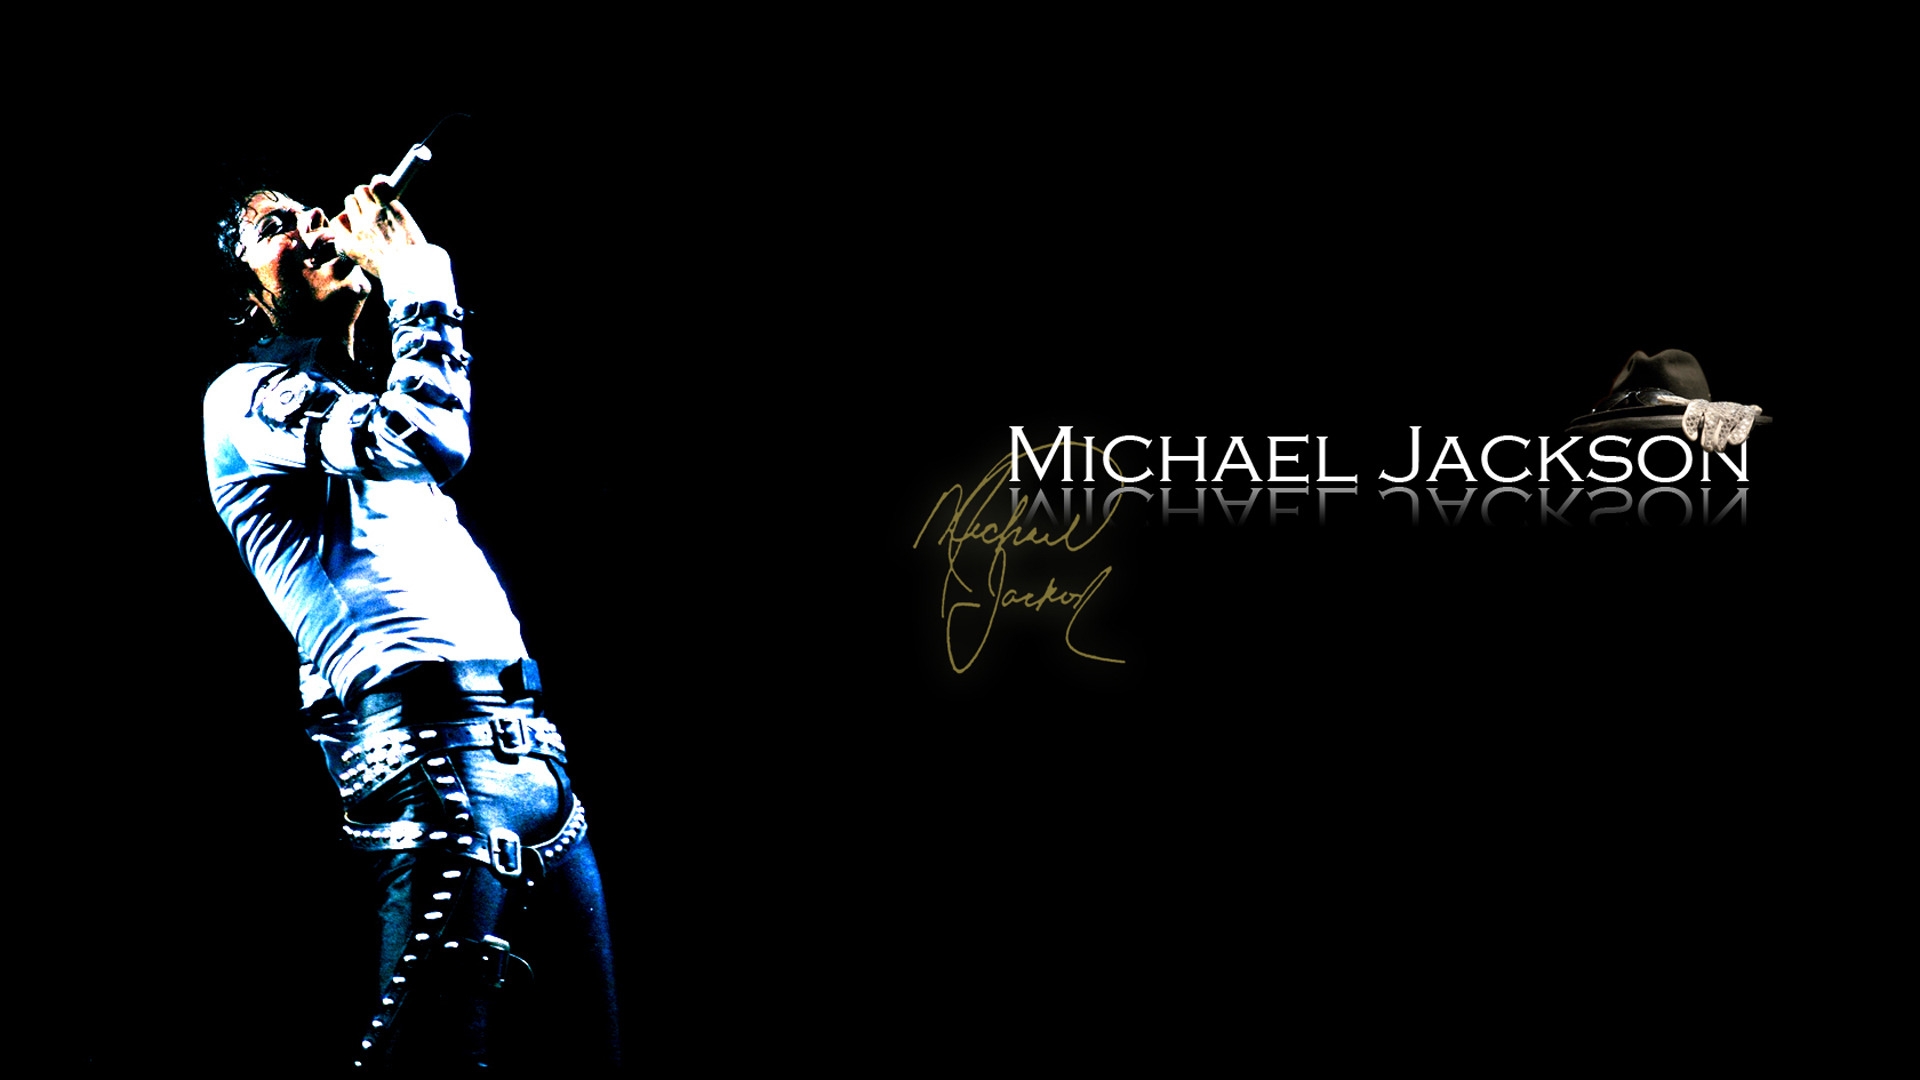 Michael Jackson for 1920 x 1080 HDTV 1080p resolution